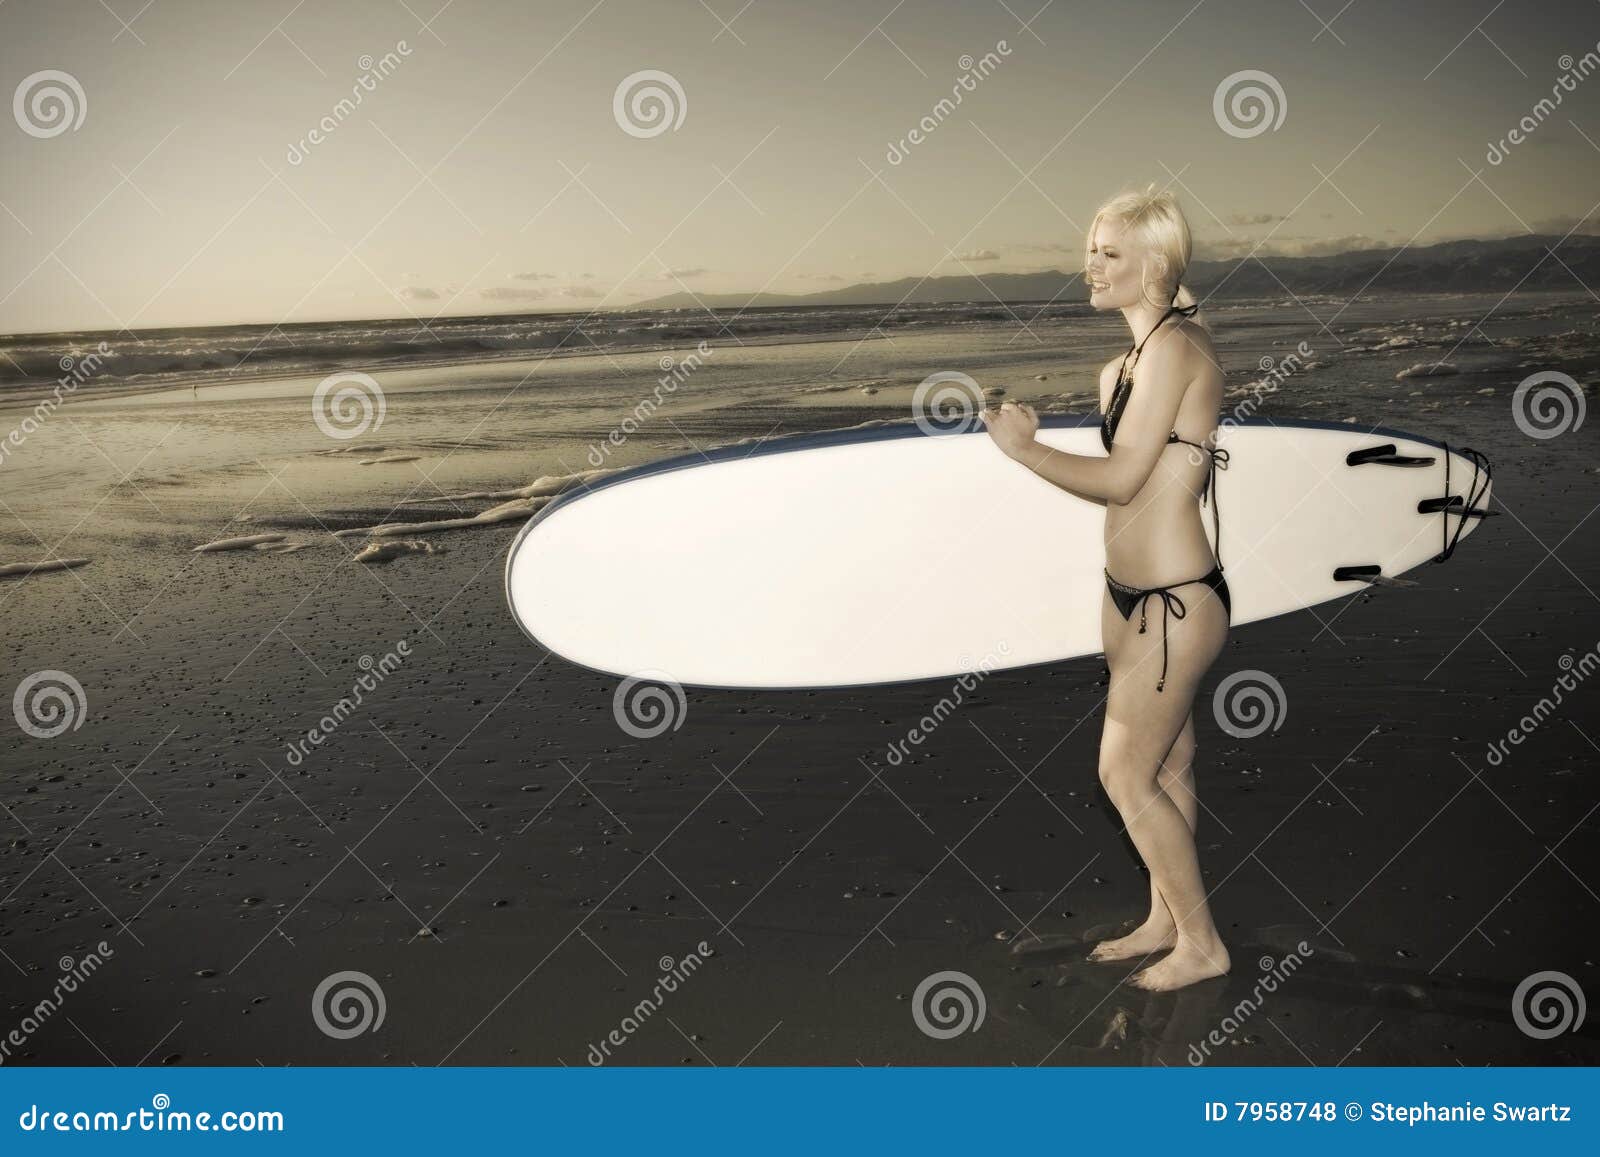 cross processed surfer